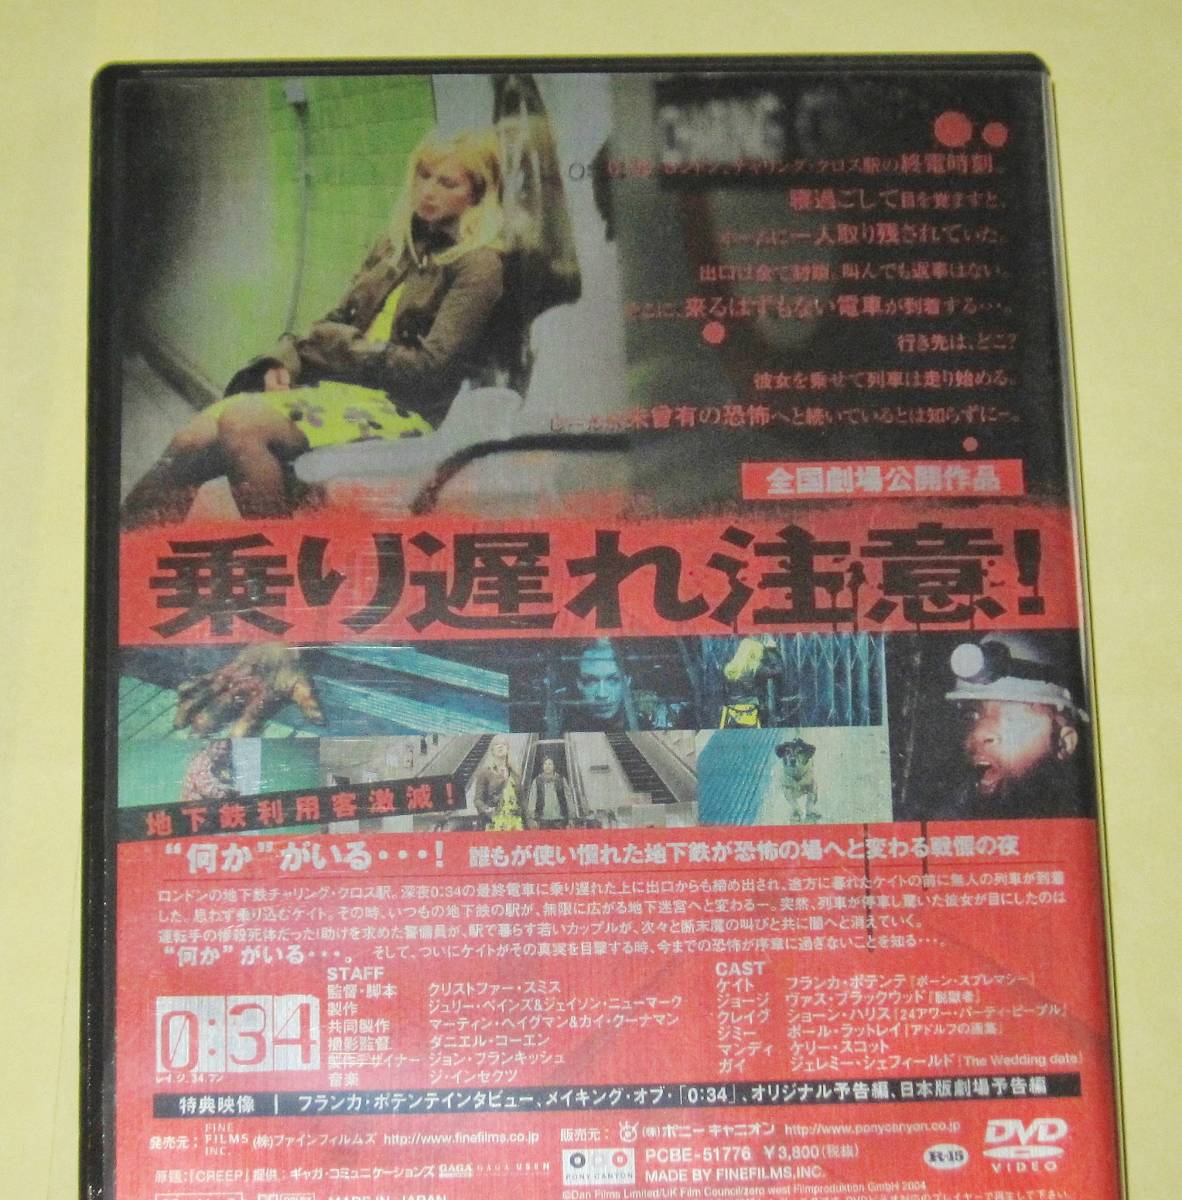 DVD　0:34 レイジ34フン　『ラン・ローラ・ラン』のフランカ・ポテンテ主演、ある女性を不気味な地下鉄の恐怖が襲うホラー